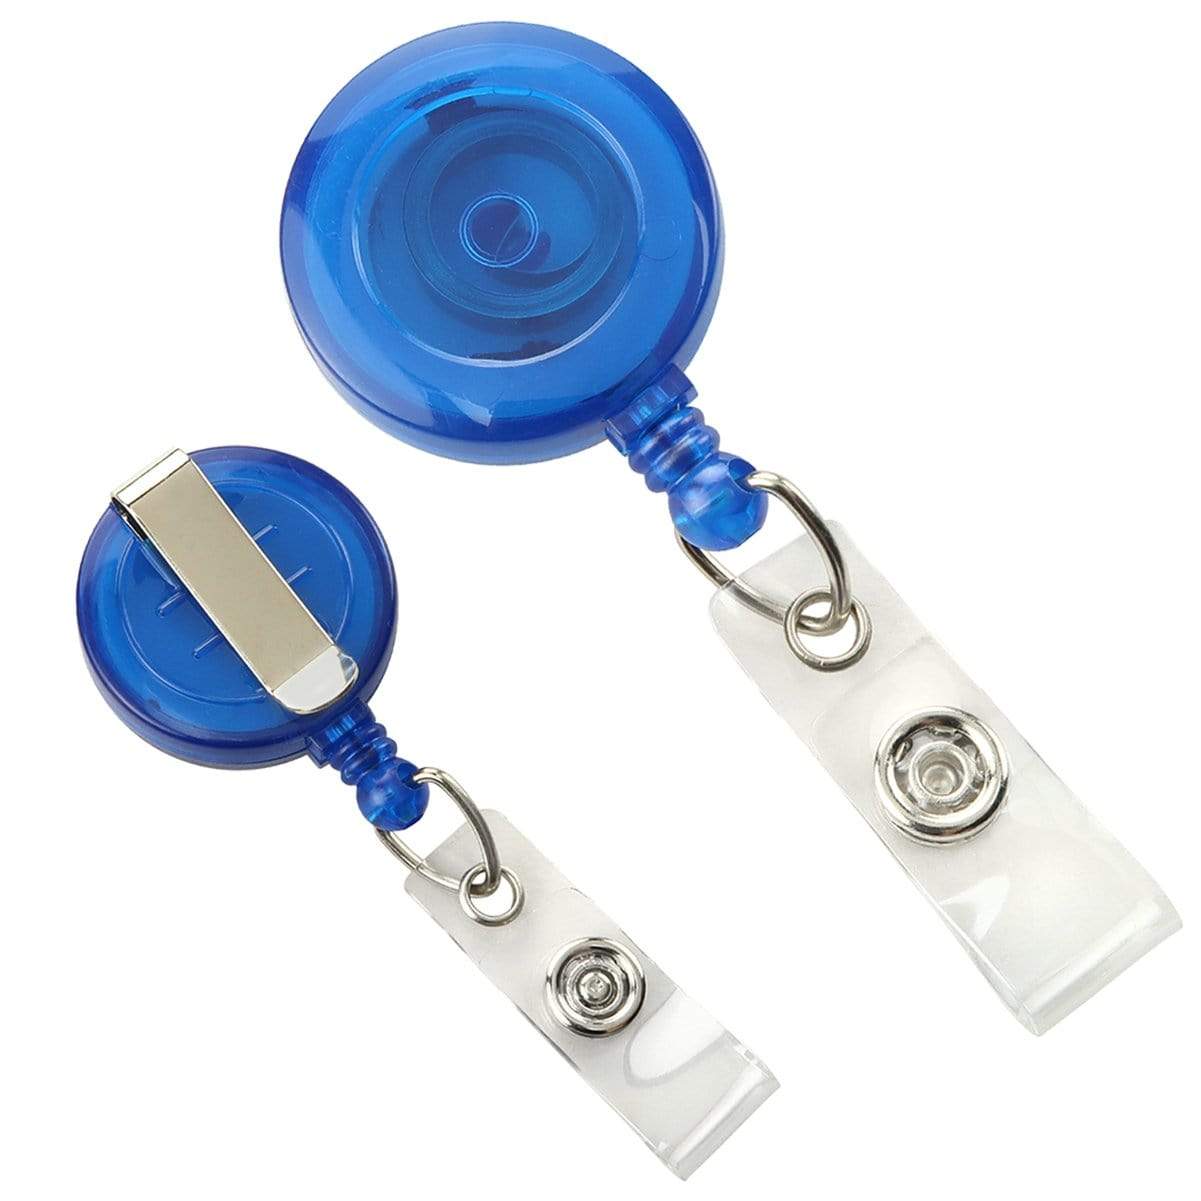 Translucent Blue Translucent Retractable Badge Reel With Belt Clip (P/N 2120-360X) 2120-3602